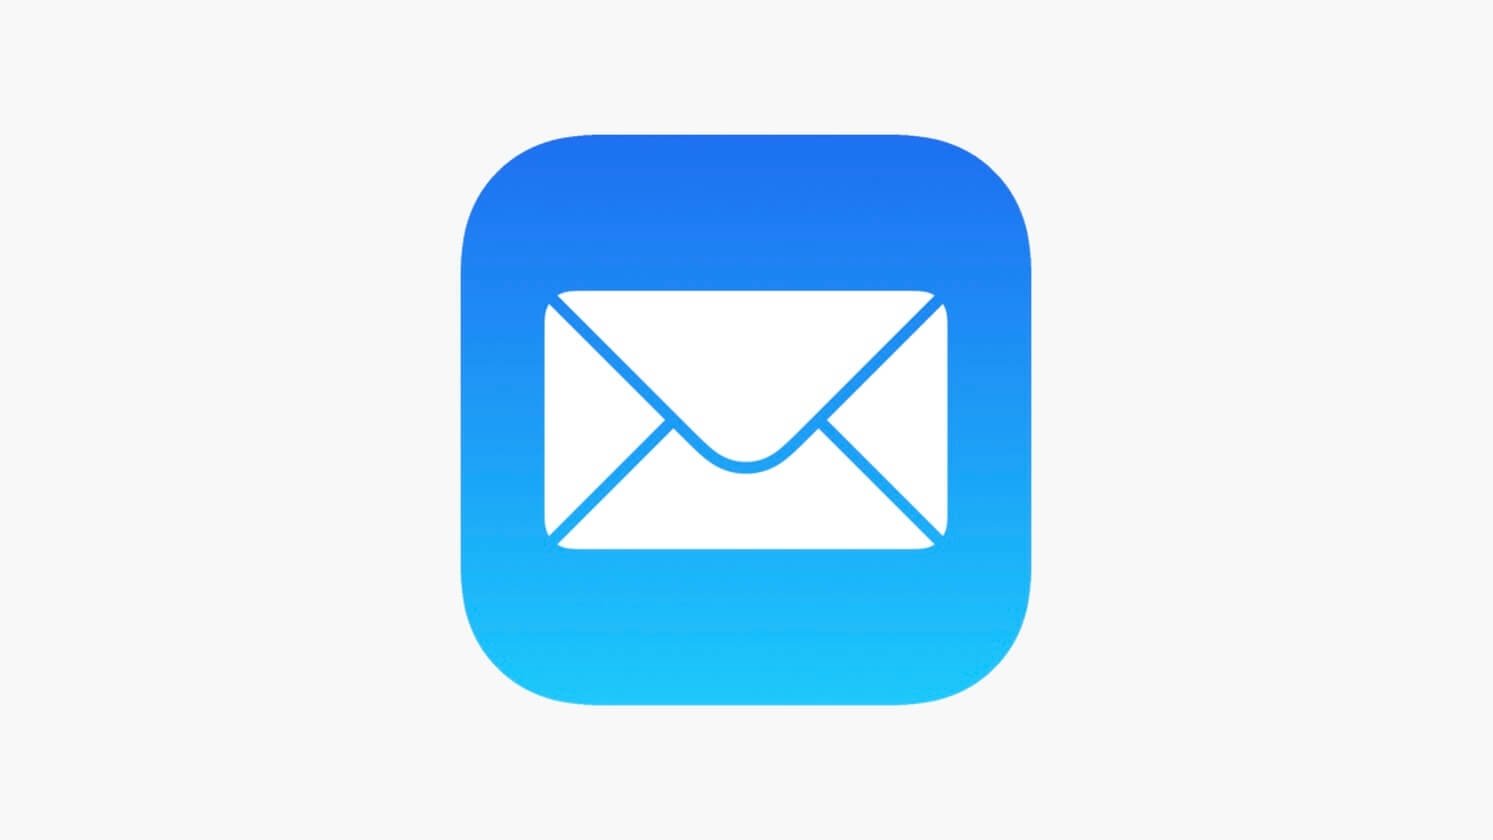 Apple Mail